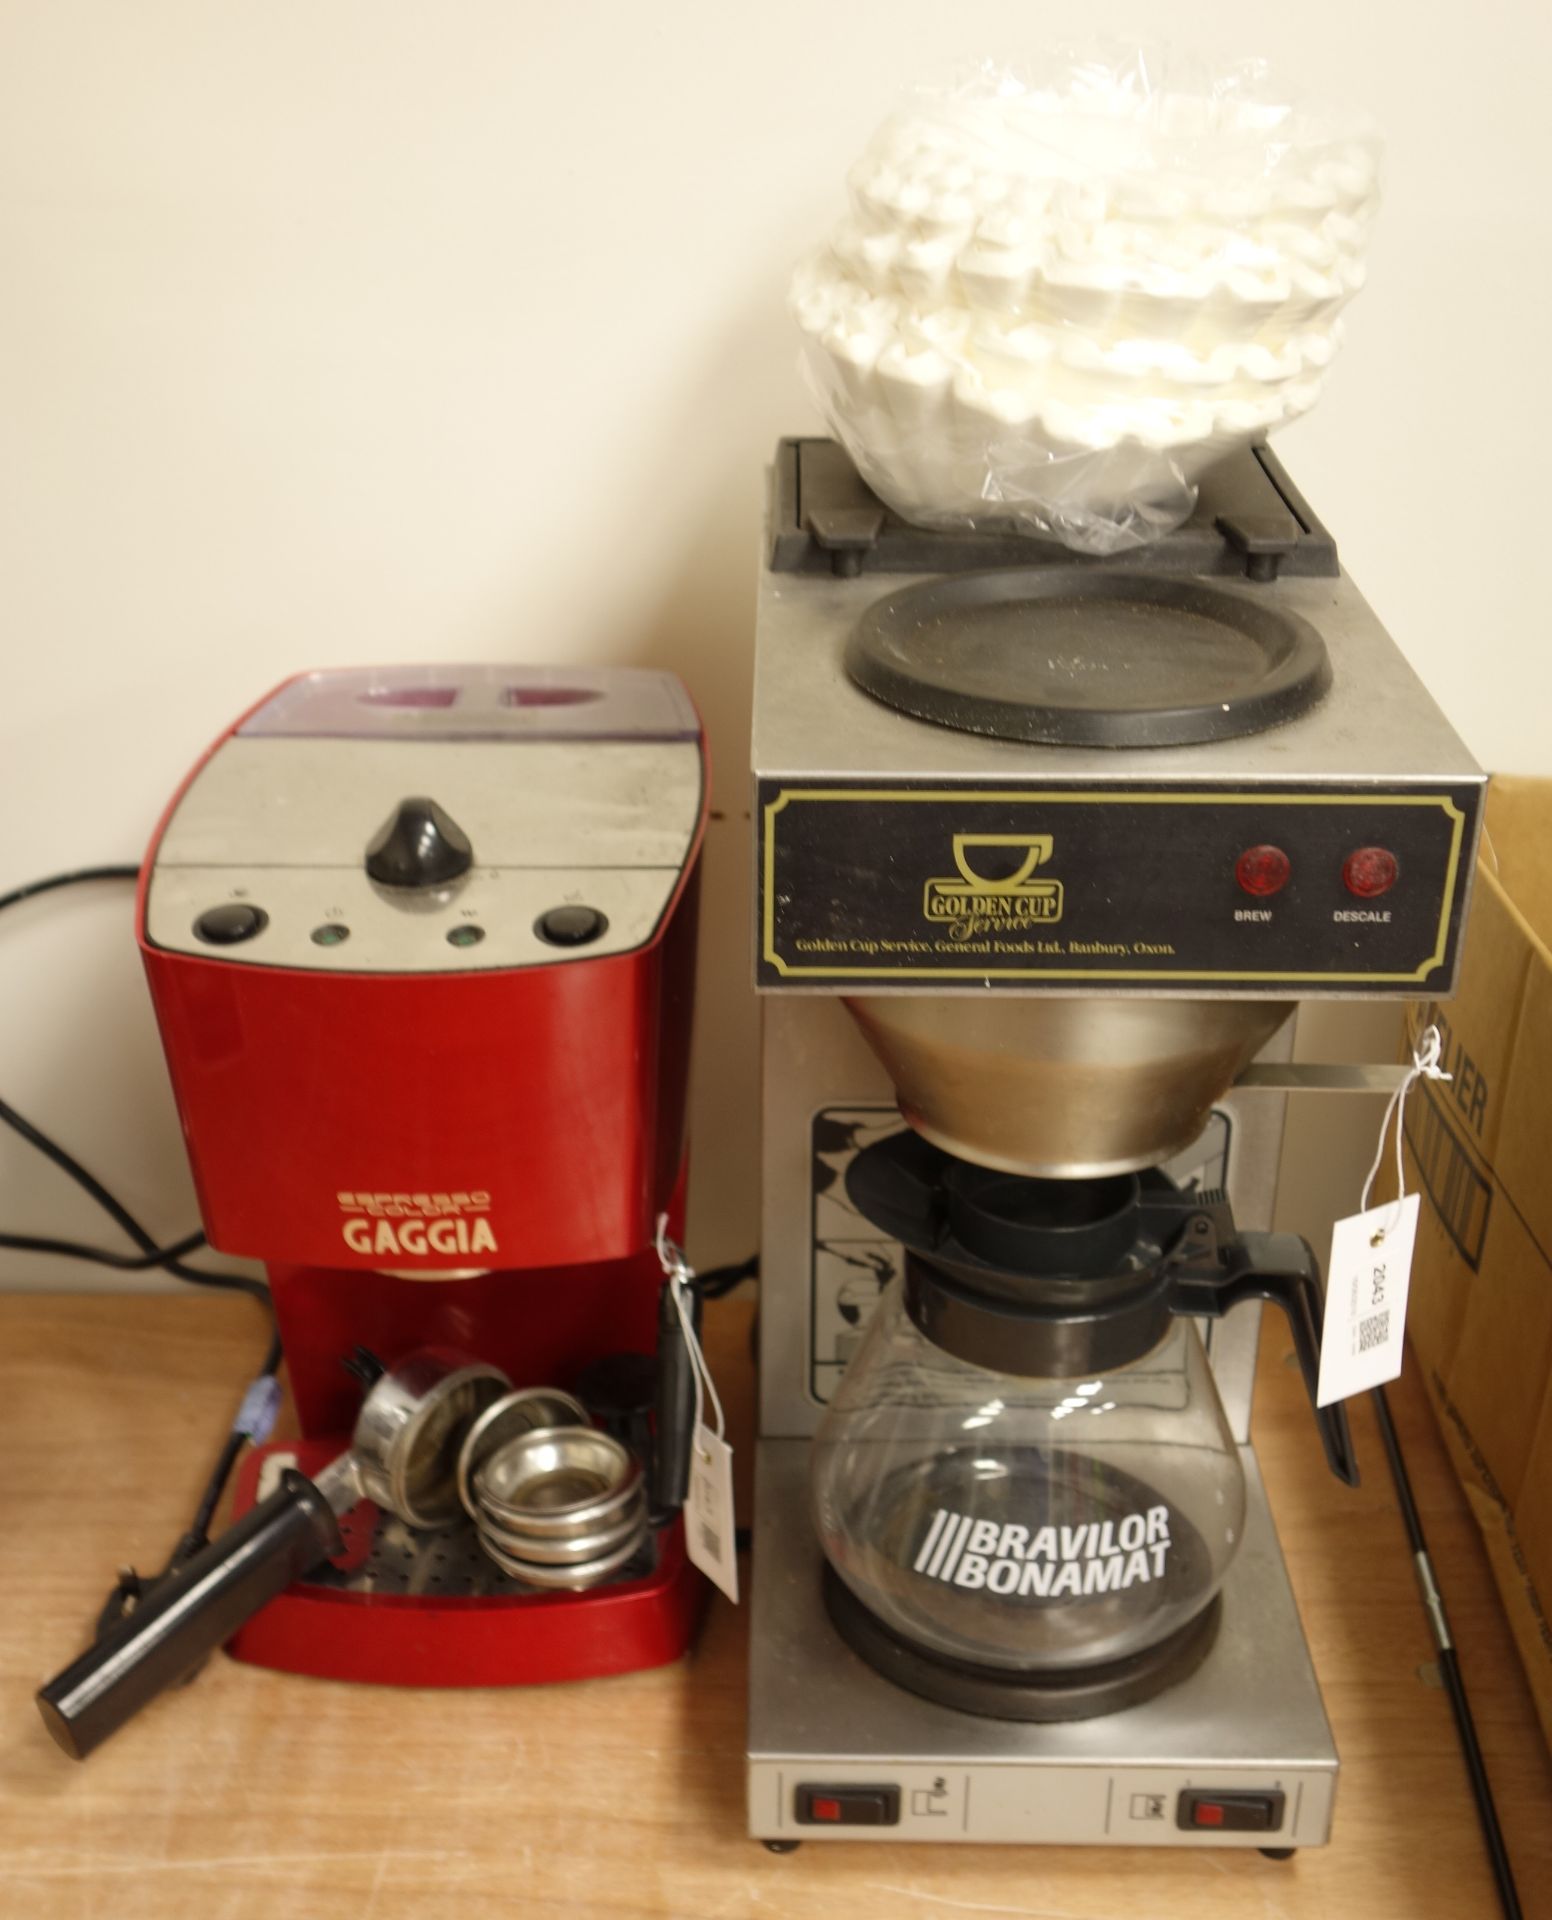 Bravilor Bonamat 'Golden Cup Service' filter coffee machine and Gaggia espresso coffee machine